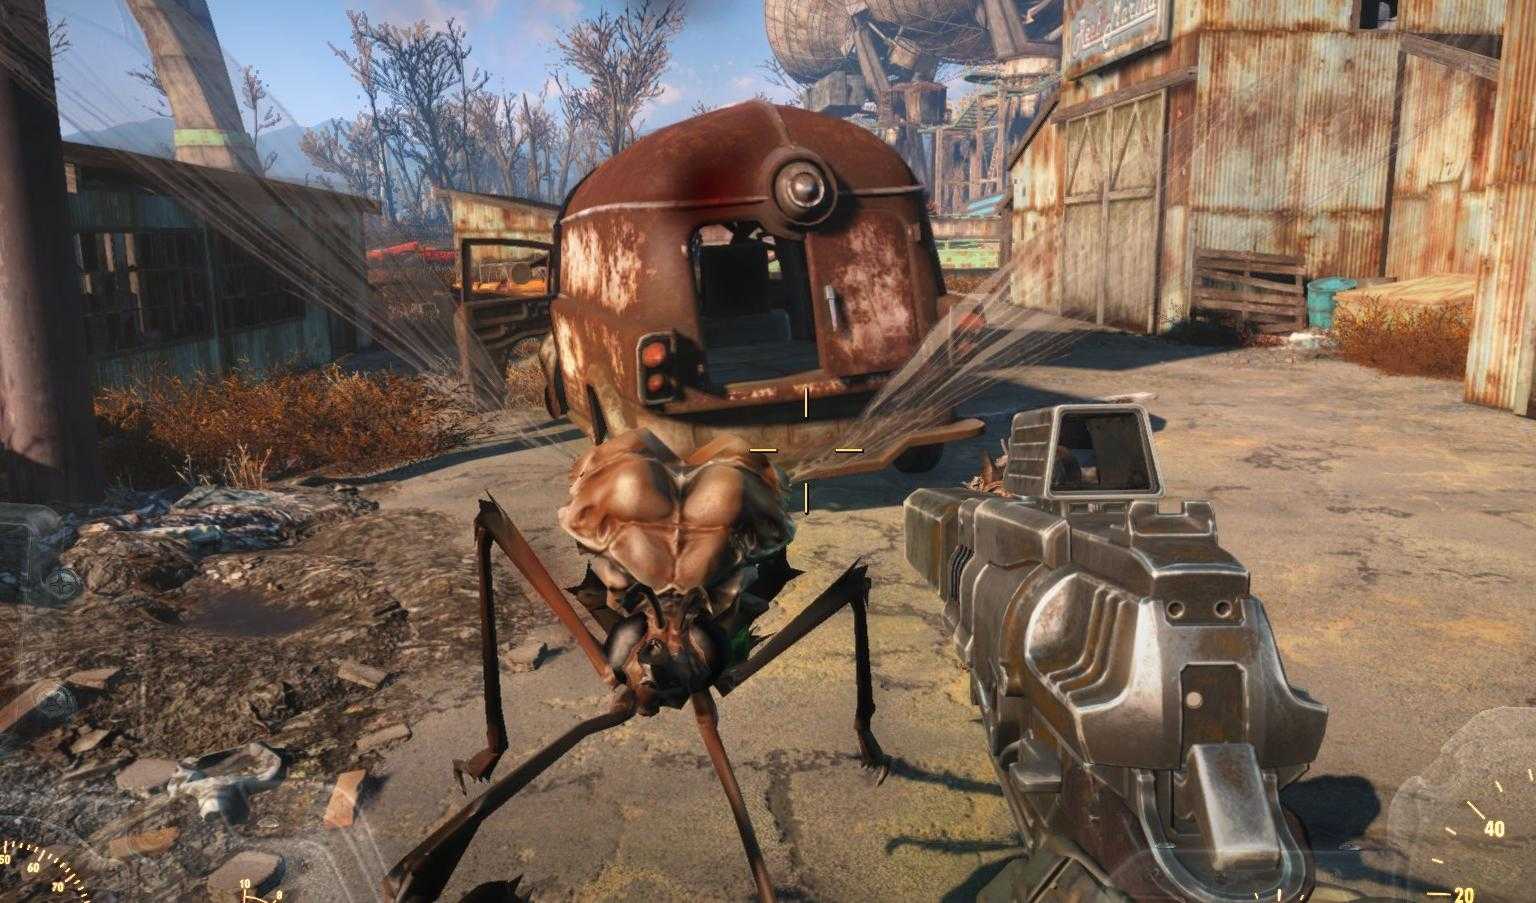 Fallout 4 nosteam torrent braccia avanti braccia indietro torrent